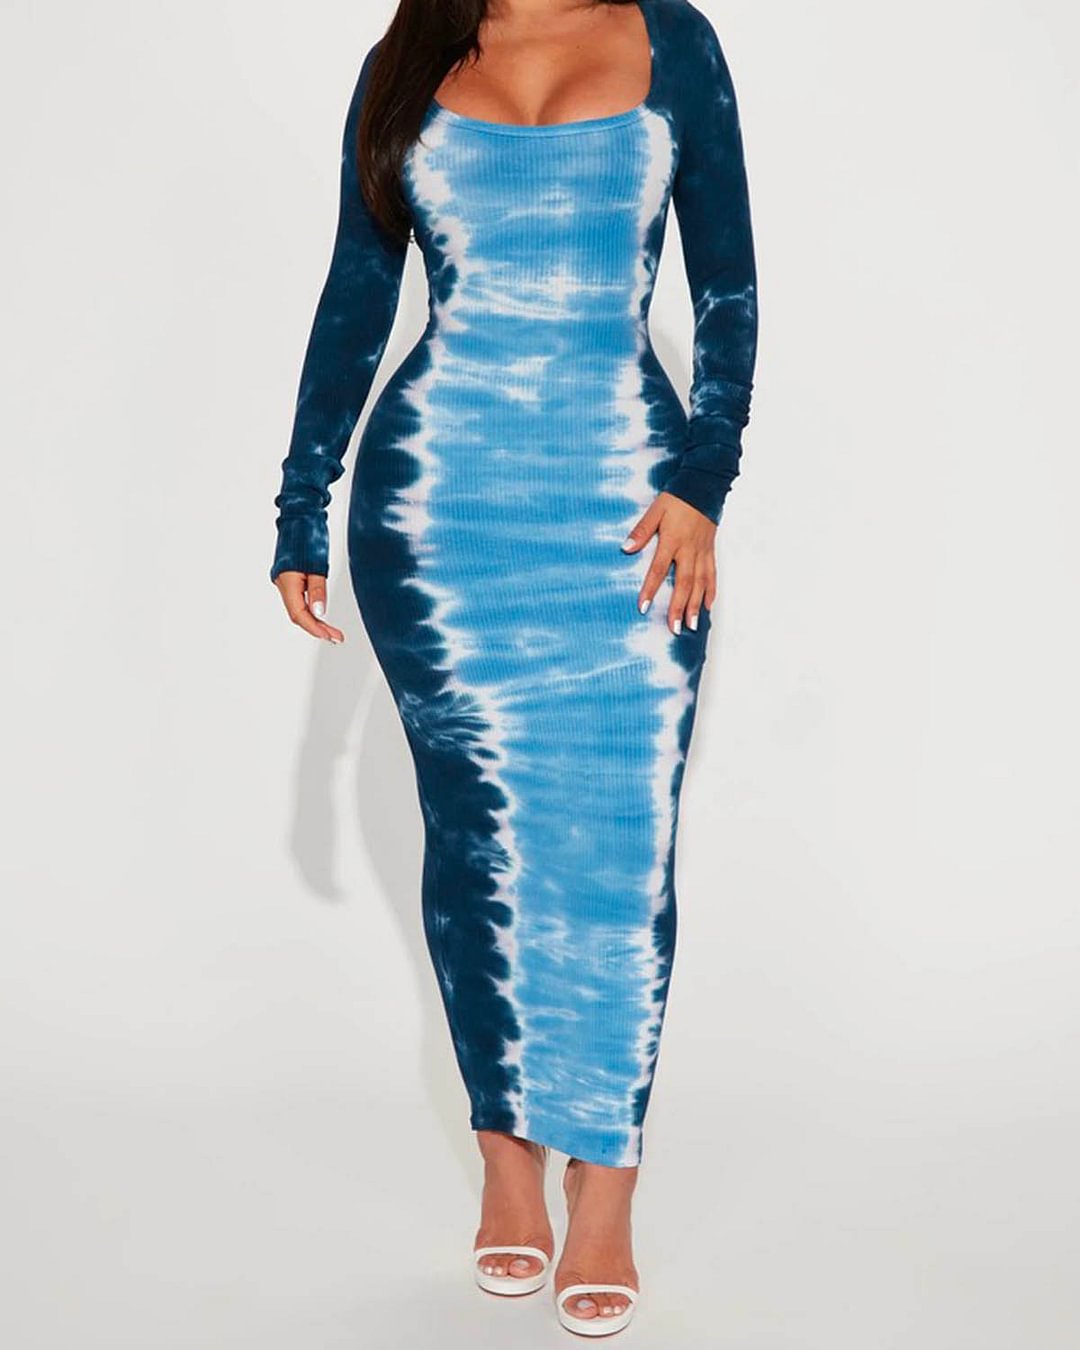 Women's Sexy Printed Bodycon Dress